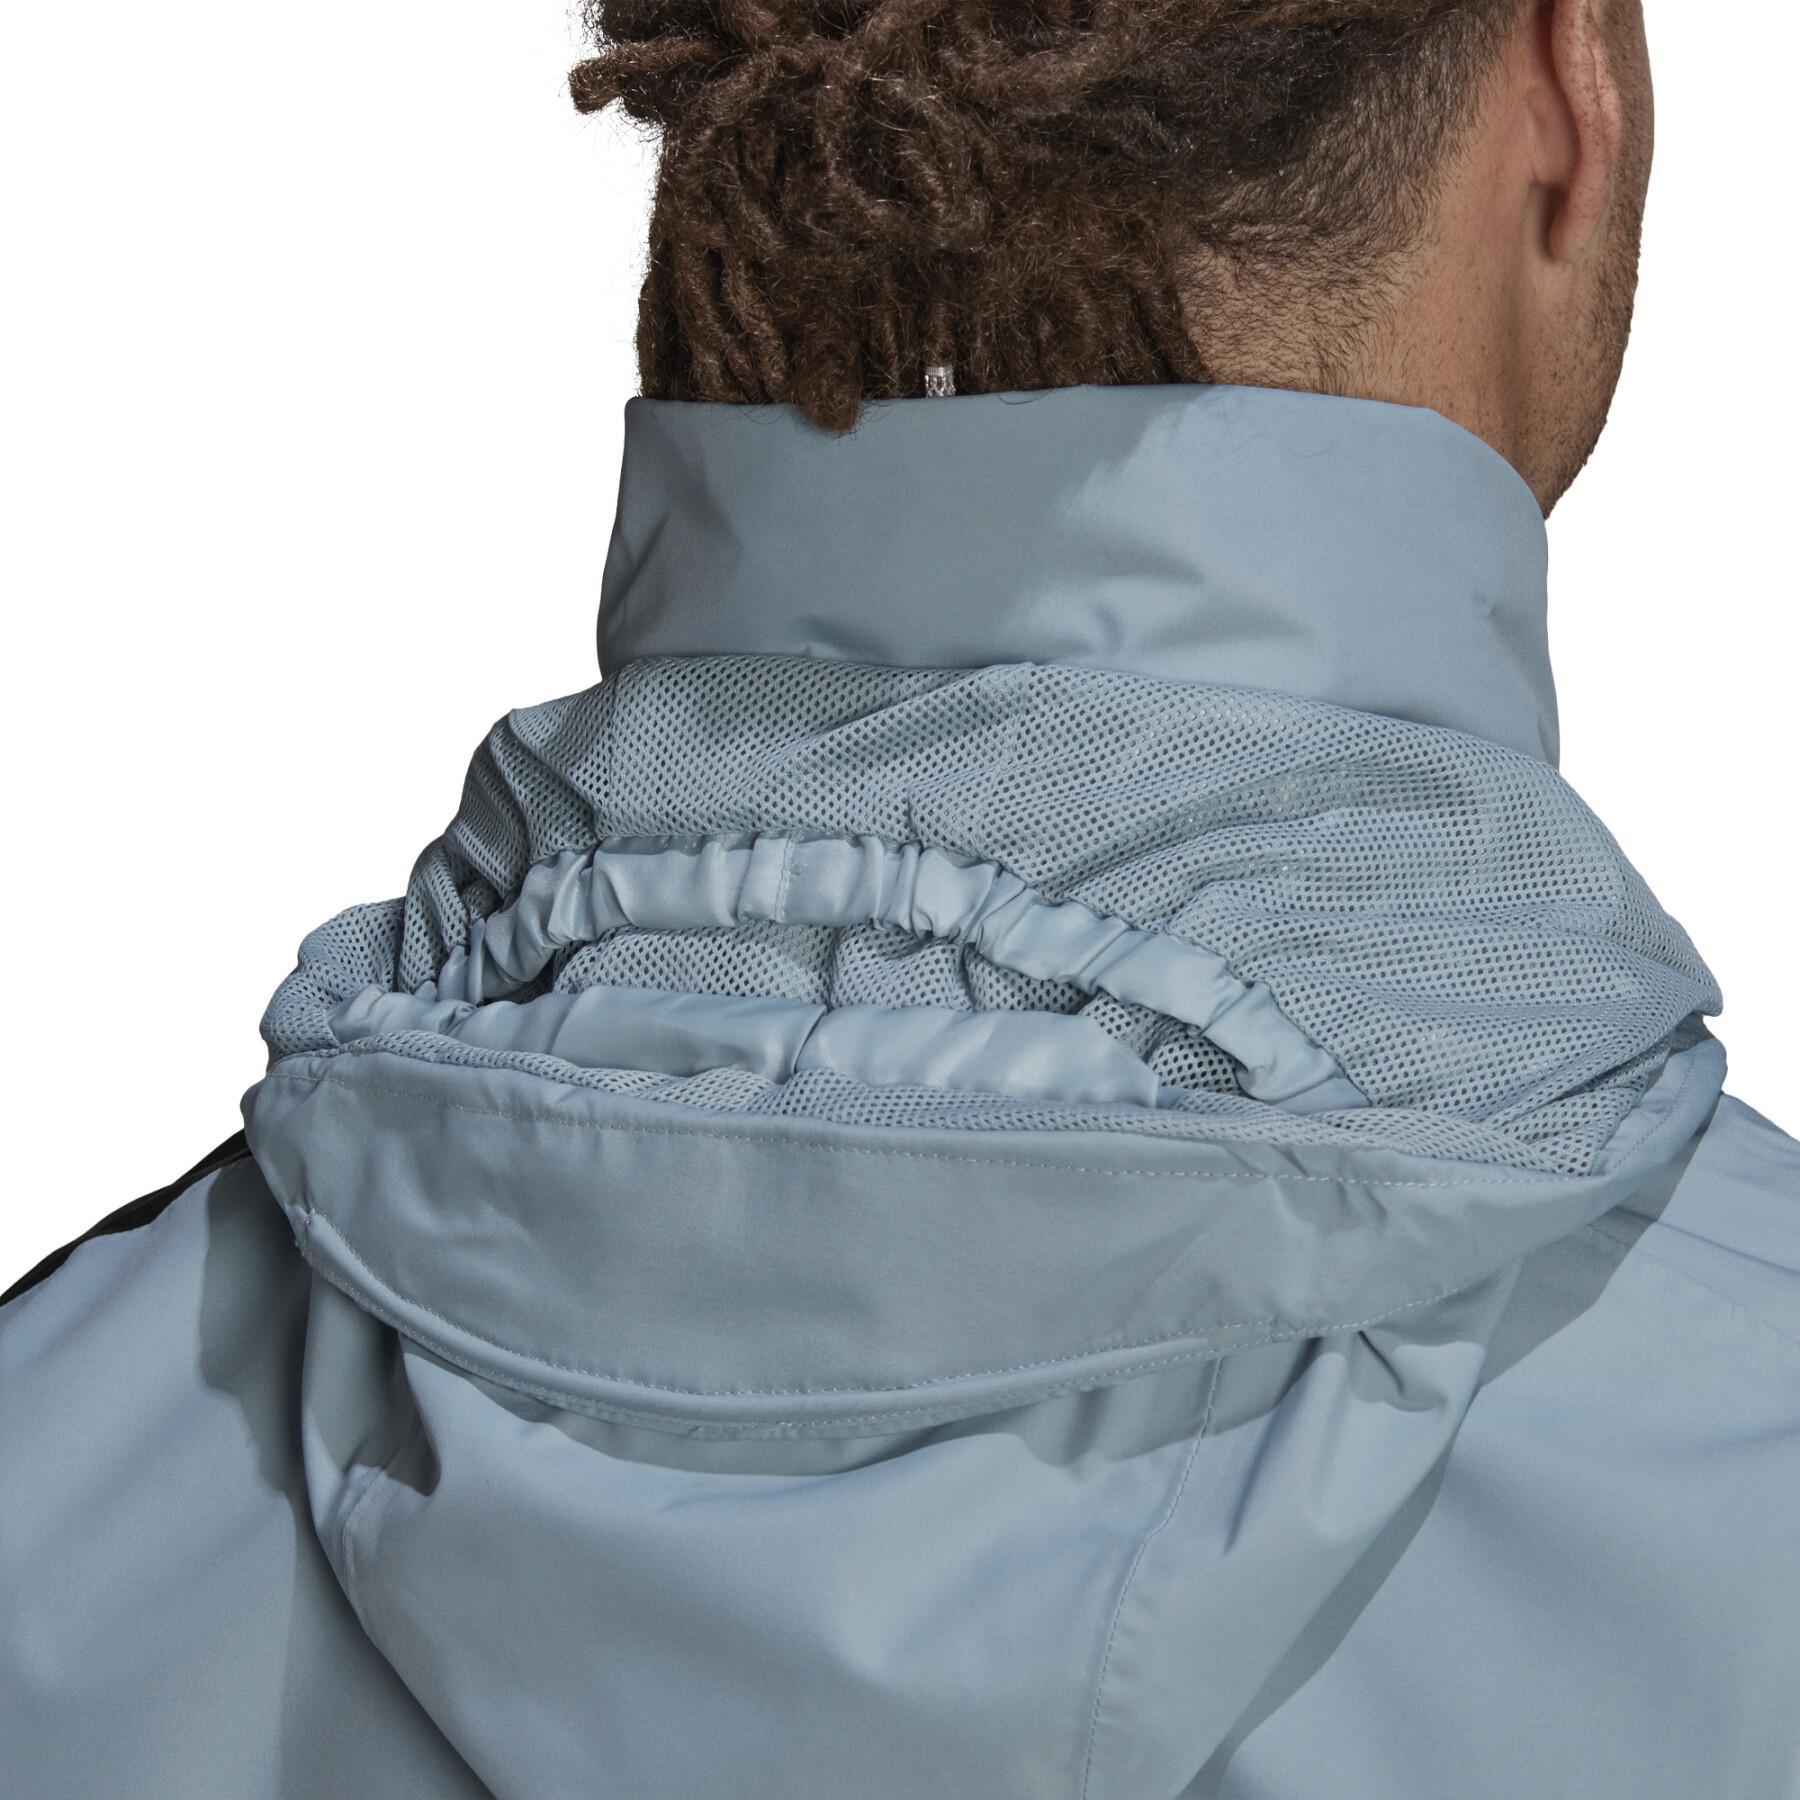 Waterproof jacket adidas Terrex Multi Primegreen Two-Layer